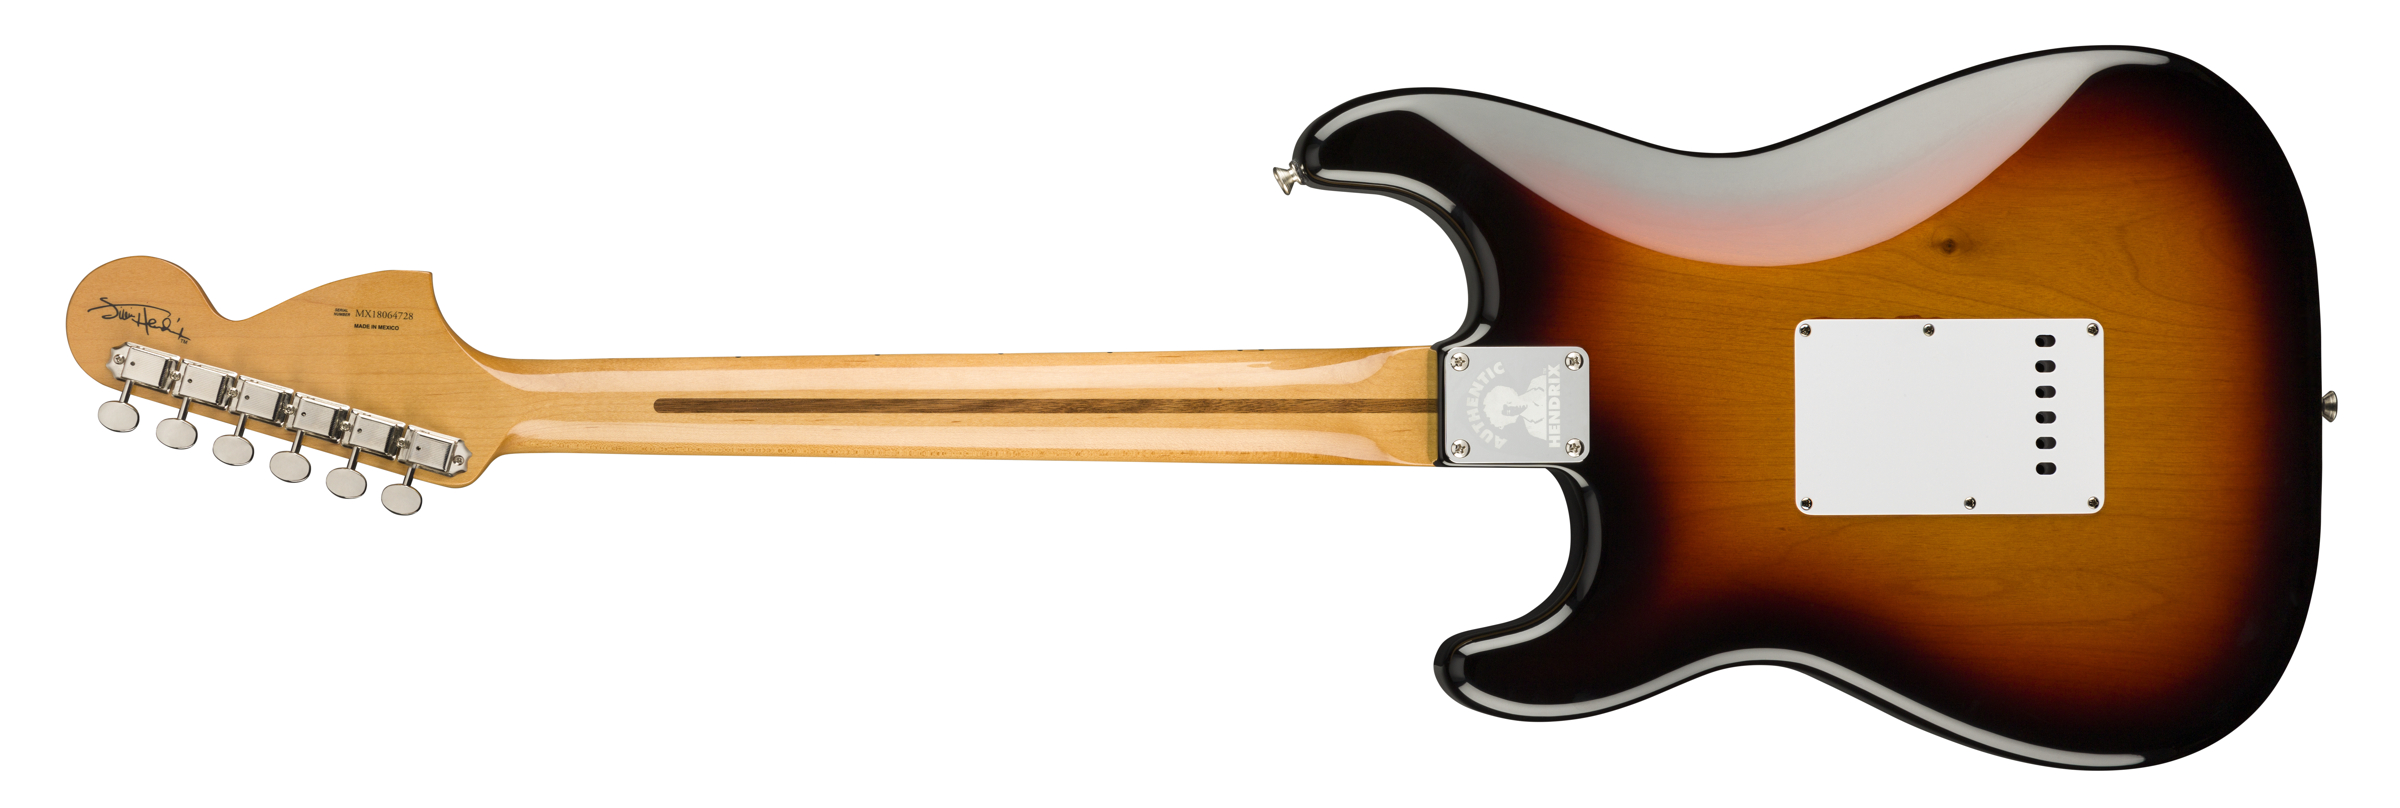 Jimi Hendrix Stratocaster 3 Color Sunburst背面画像